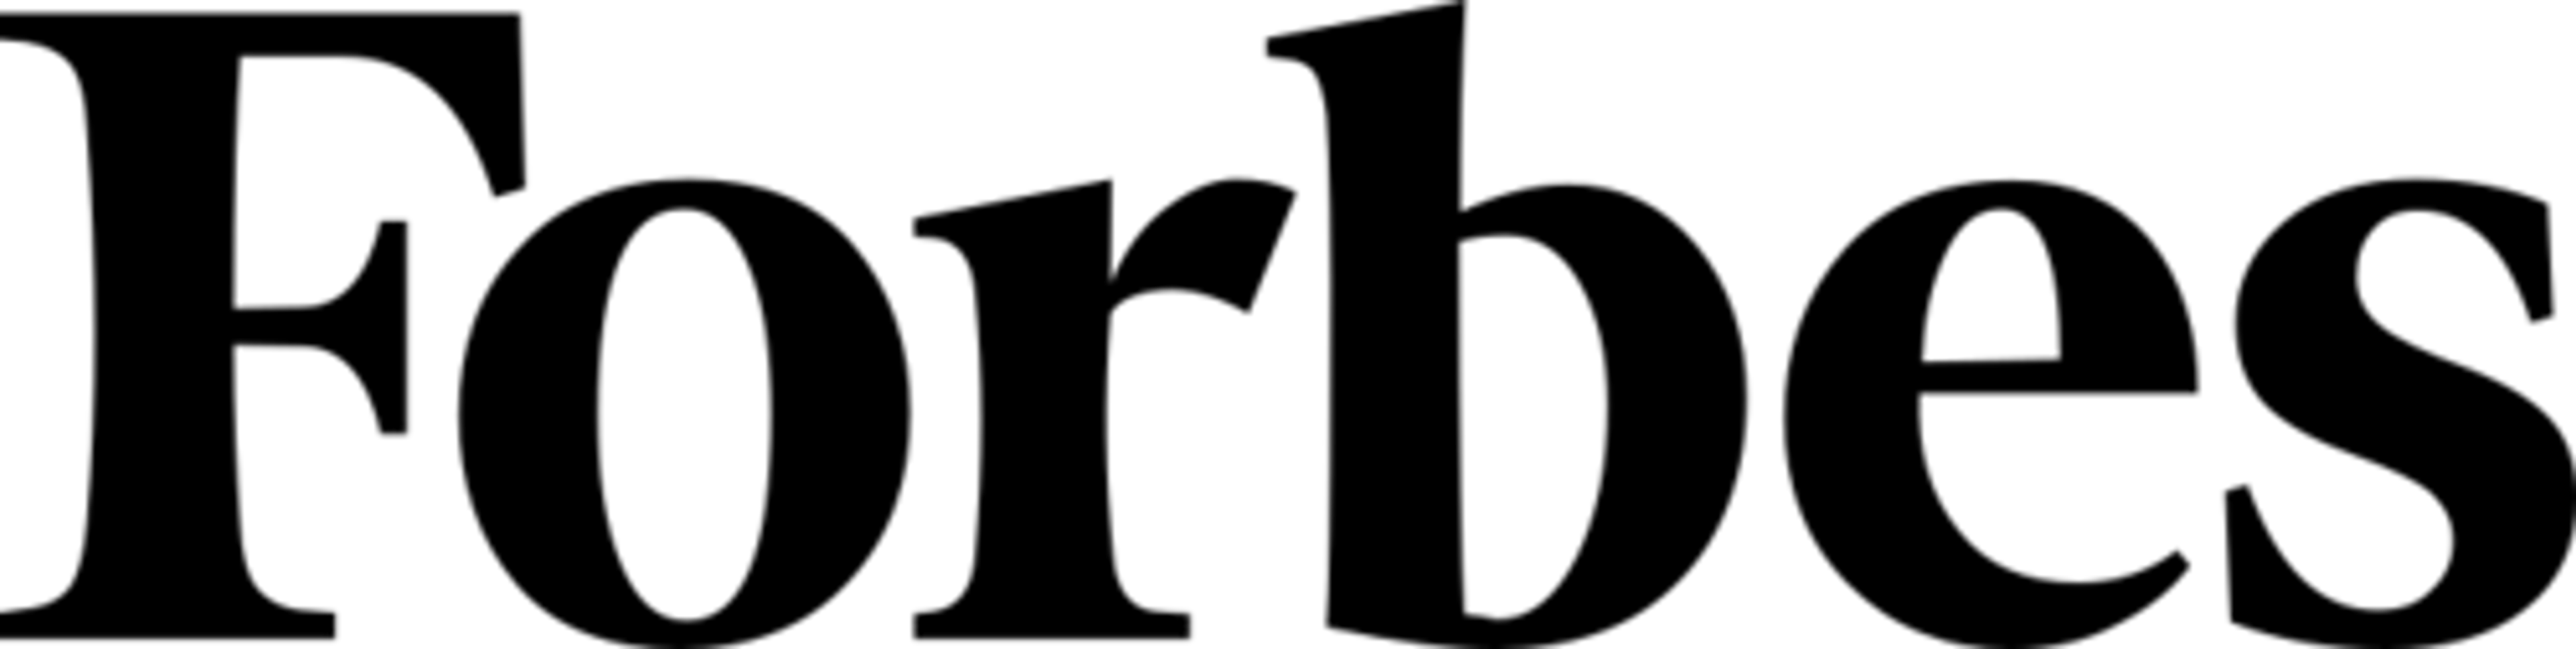 Forbed logo